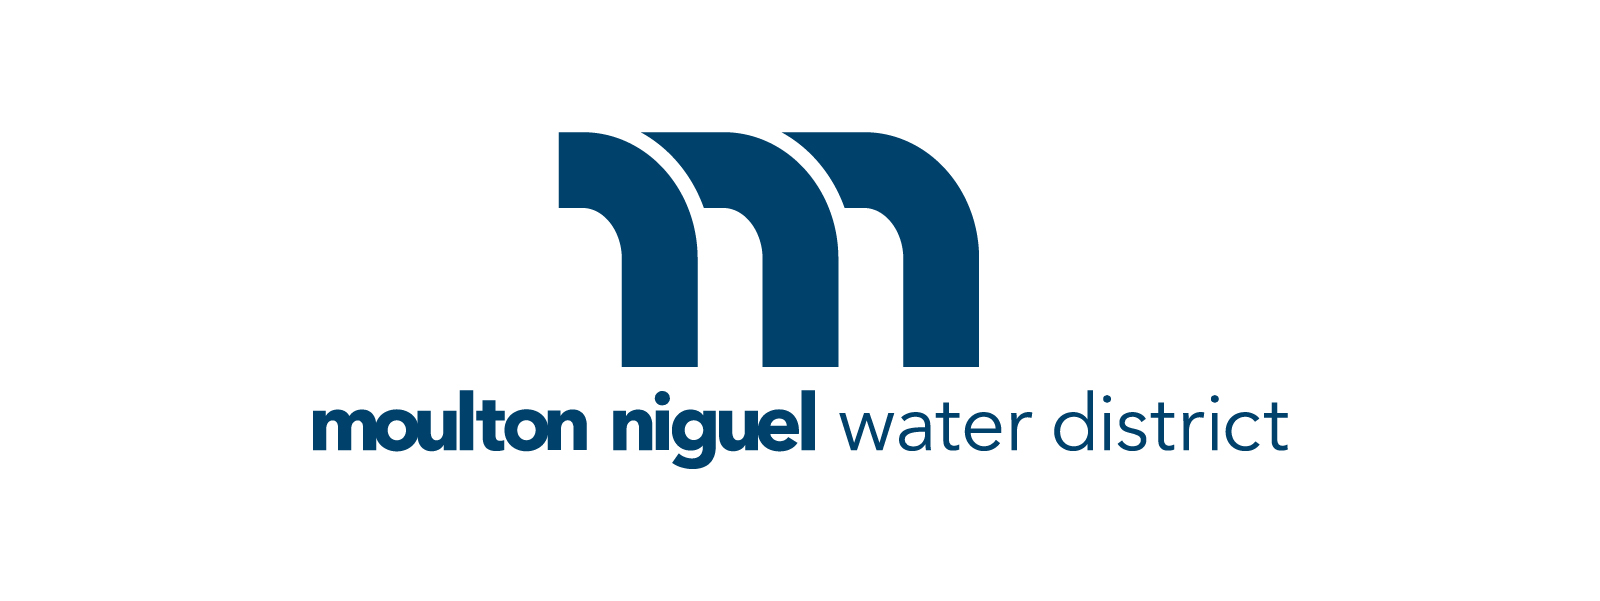 moulton niguel water district logo